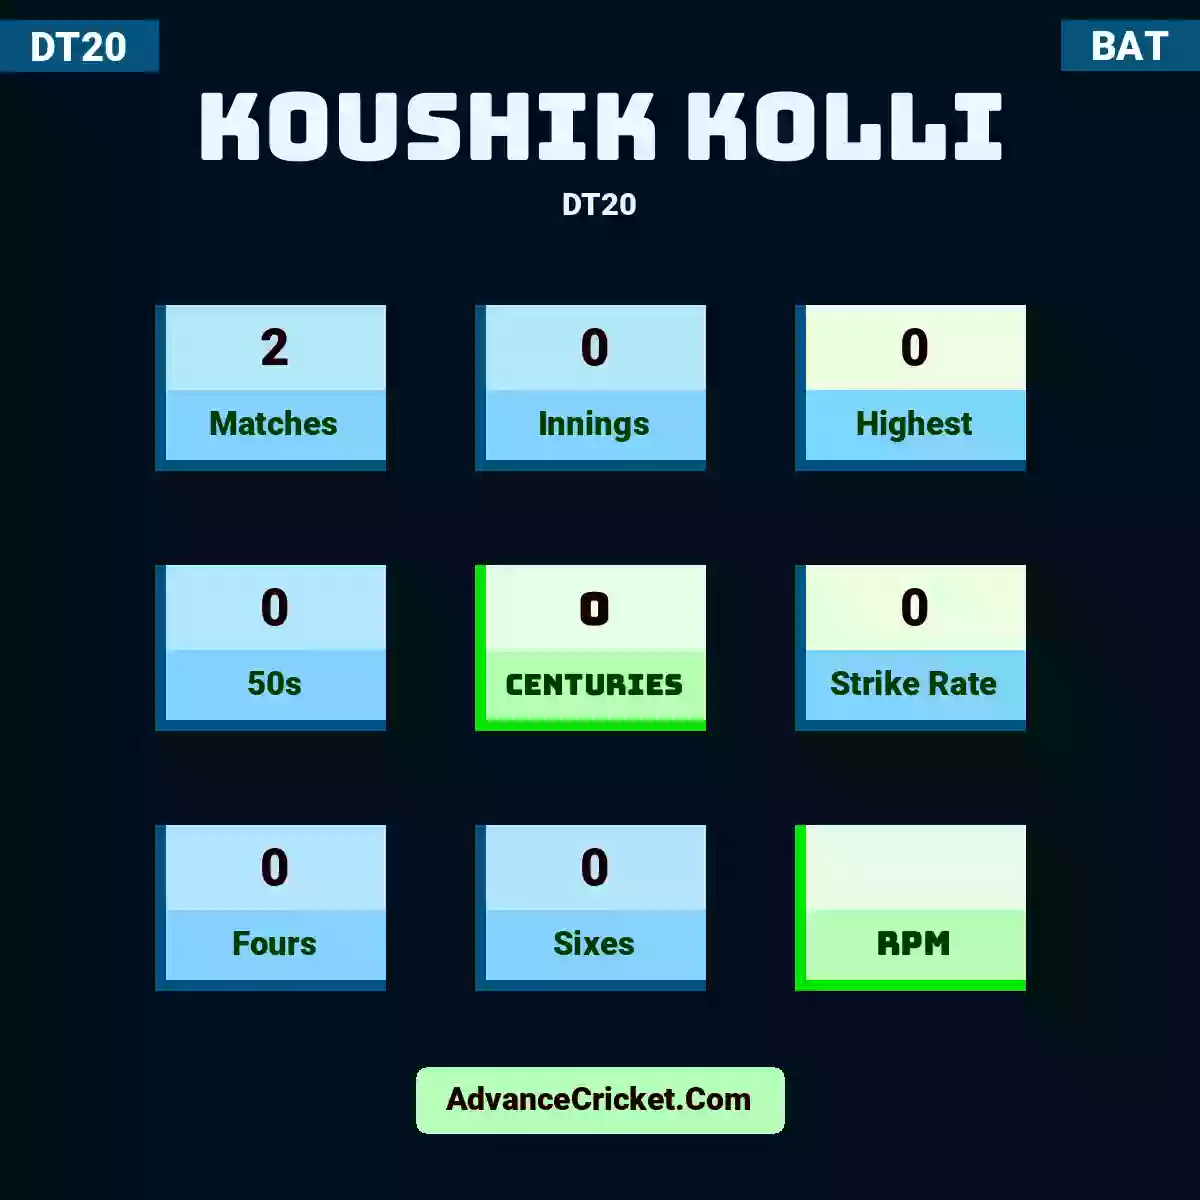 Koushik Kolli DT20 , Koushik Kolli played 2 matches, scored 0 runs as highest, 0 half-centuries, and 0 centuries, with a strike rate of 0. K.Kolli hit 0 fours and 0 sixes.